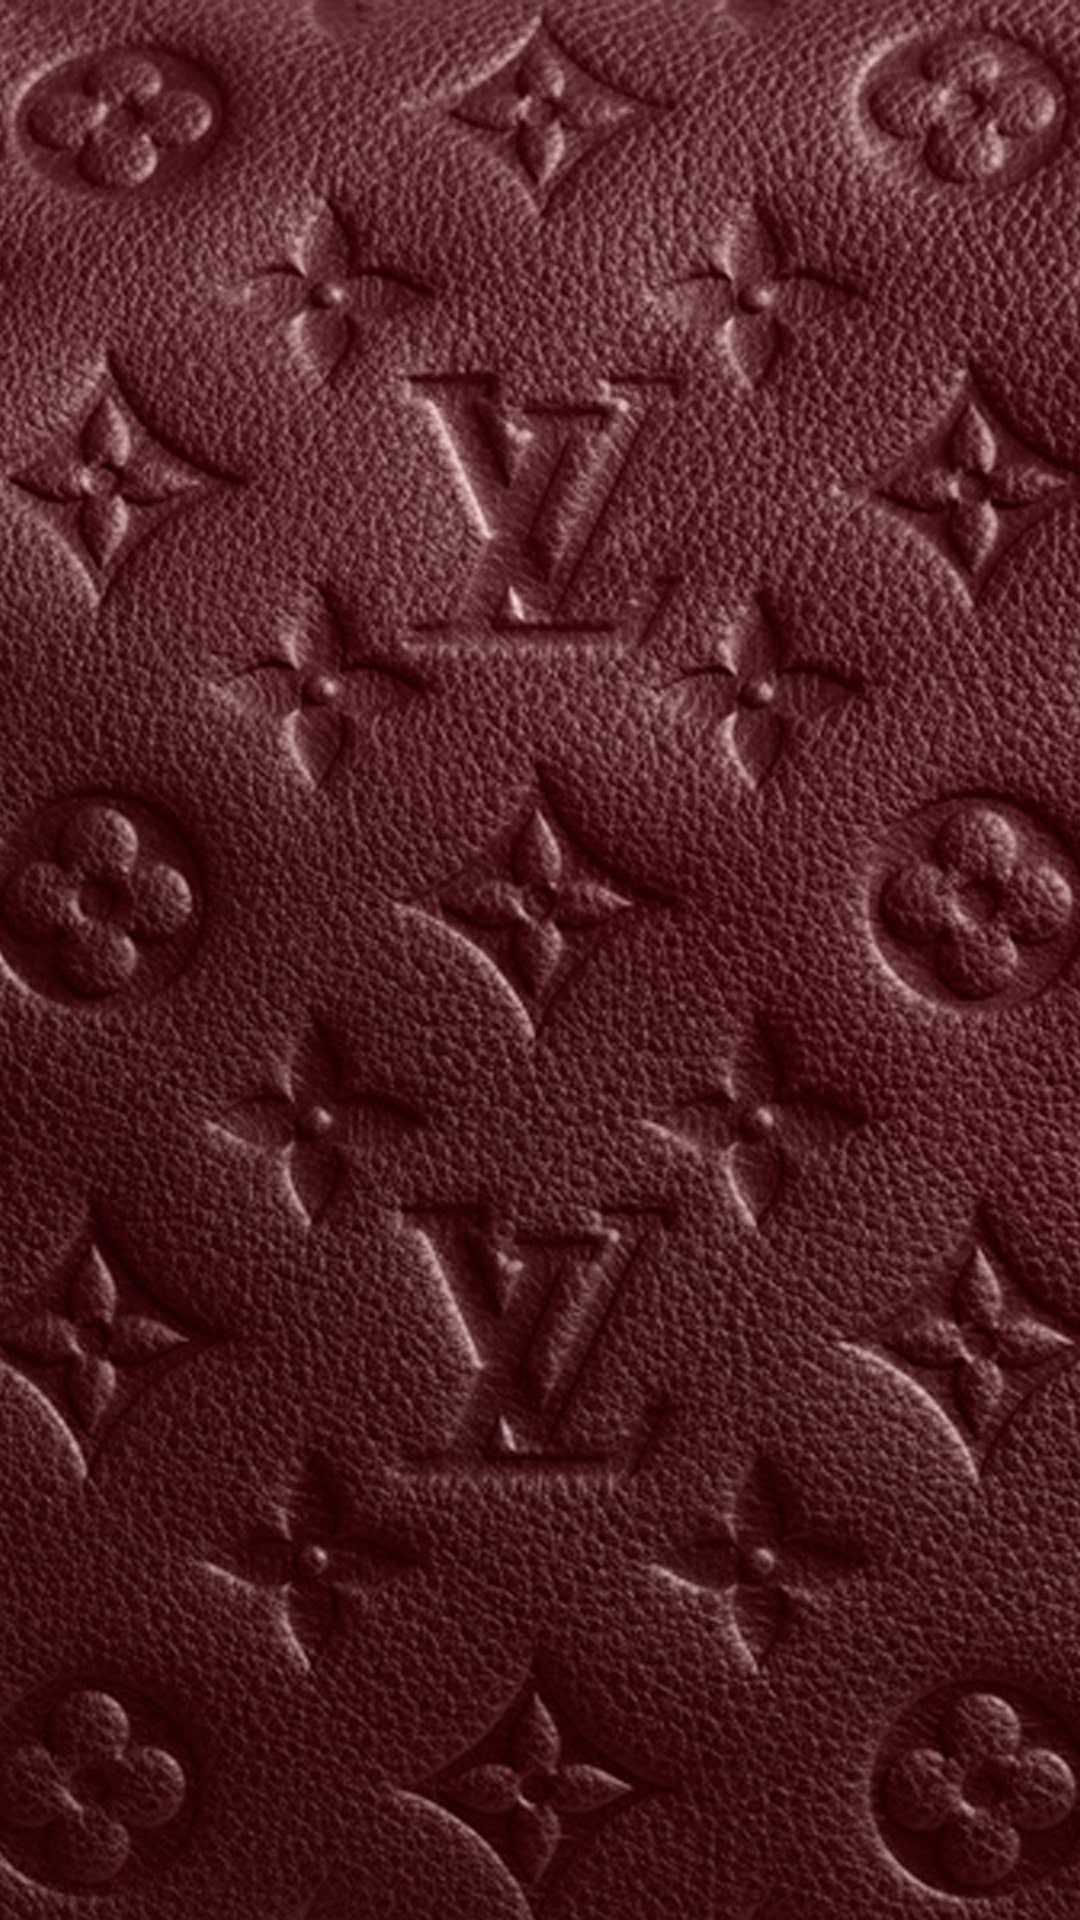 Download 4K Supreme Red Louis Vuitton Wallpaper